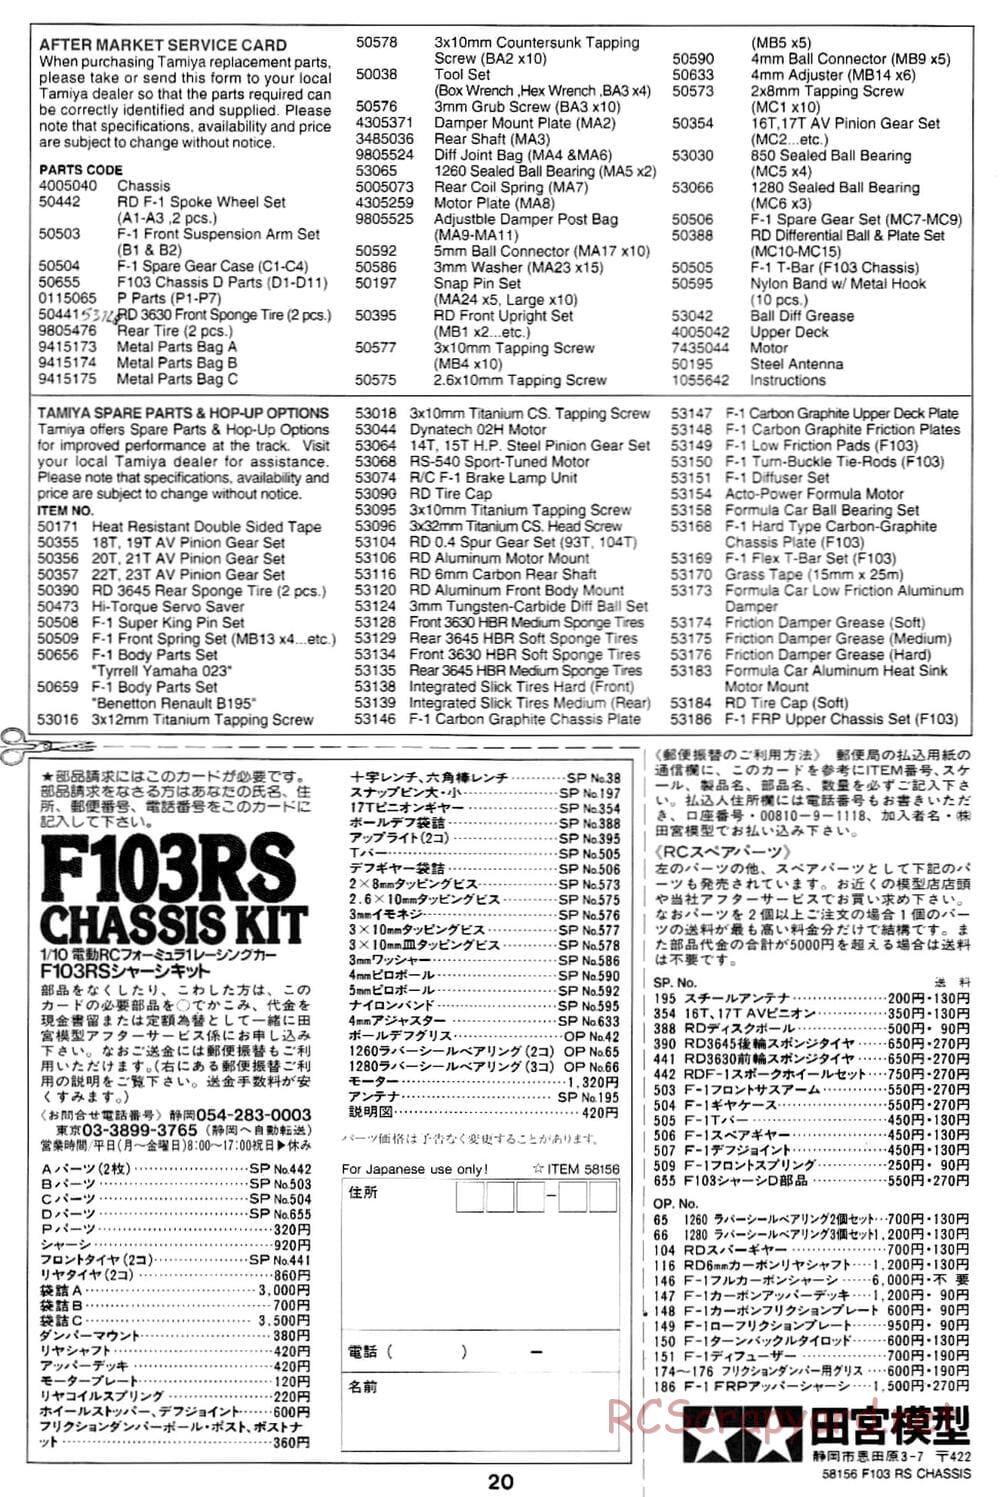 Tamiya - F103RS Chassis - Manual - Page 20